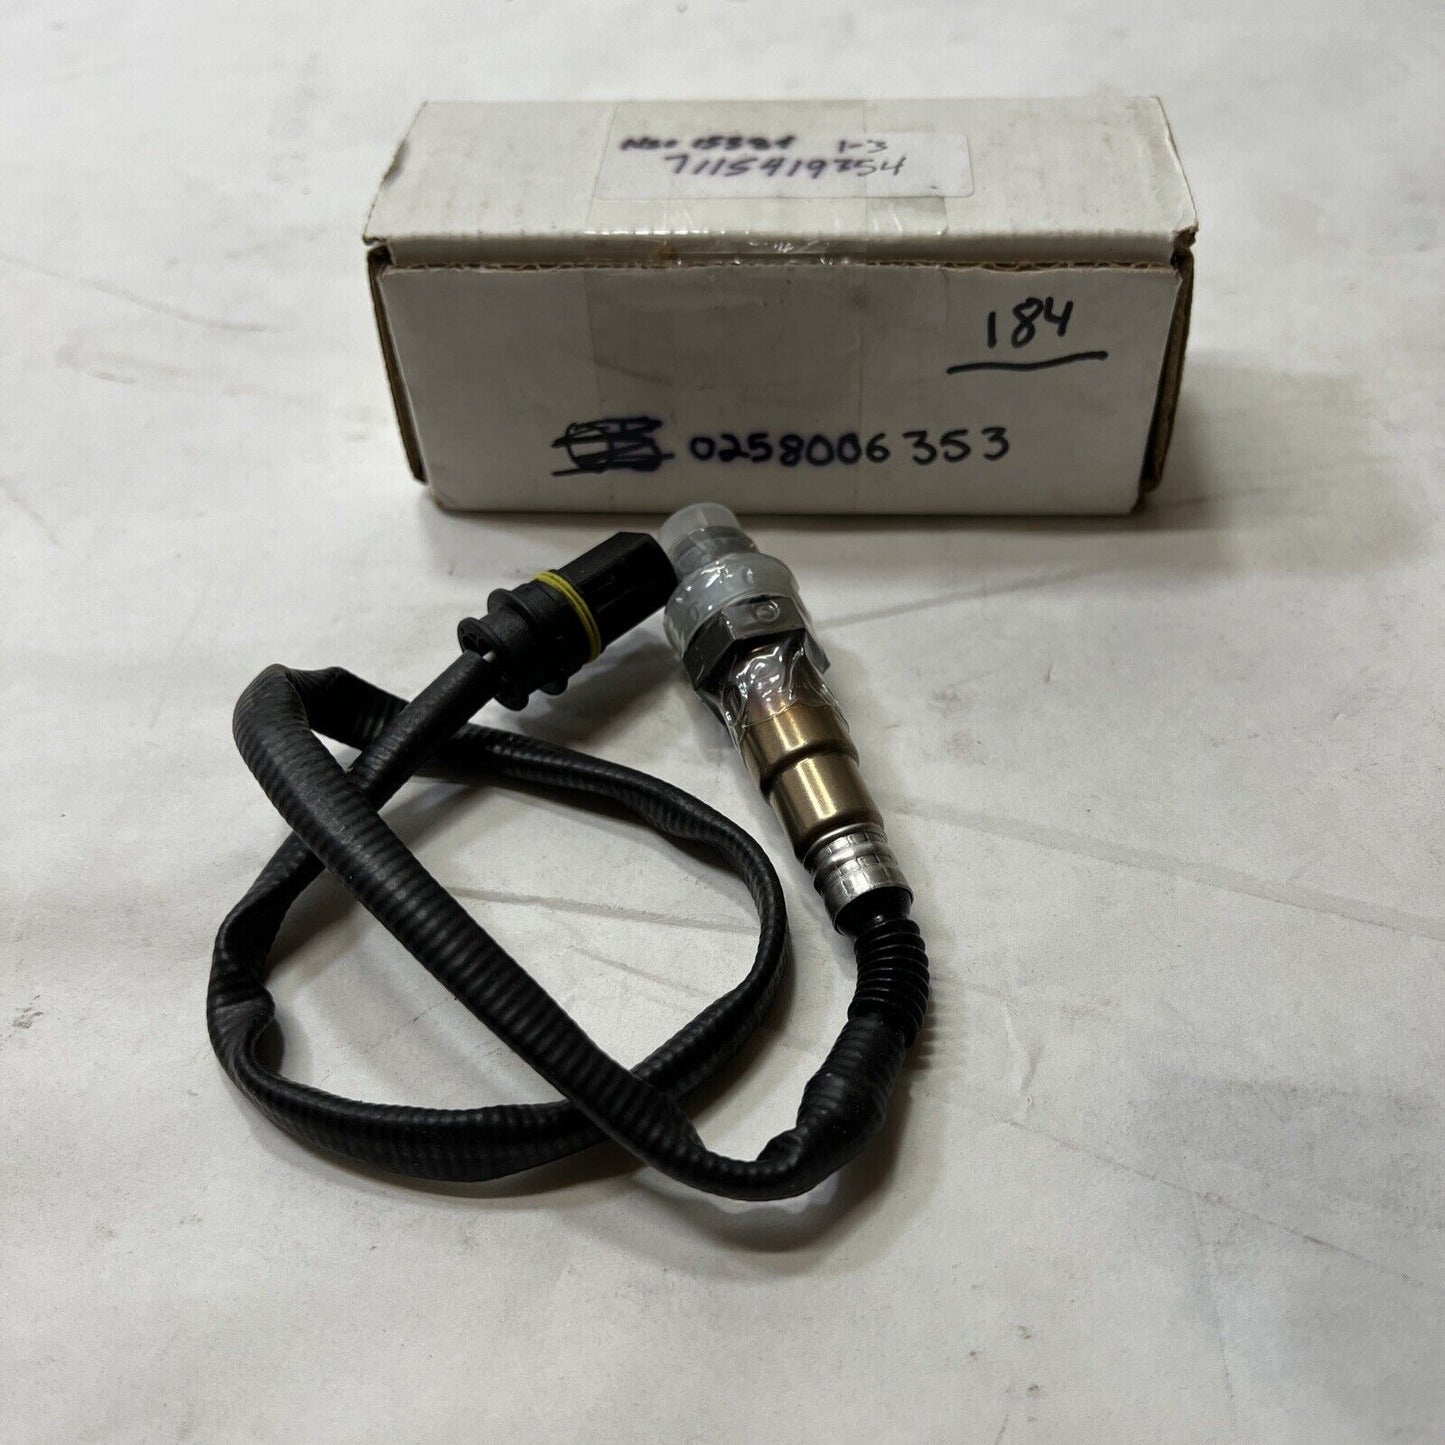 New OEM Genuine Mercedes Benz Bosch Oxygen Sensor Cable 0258006353